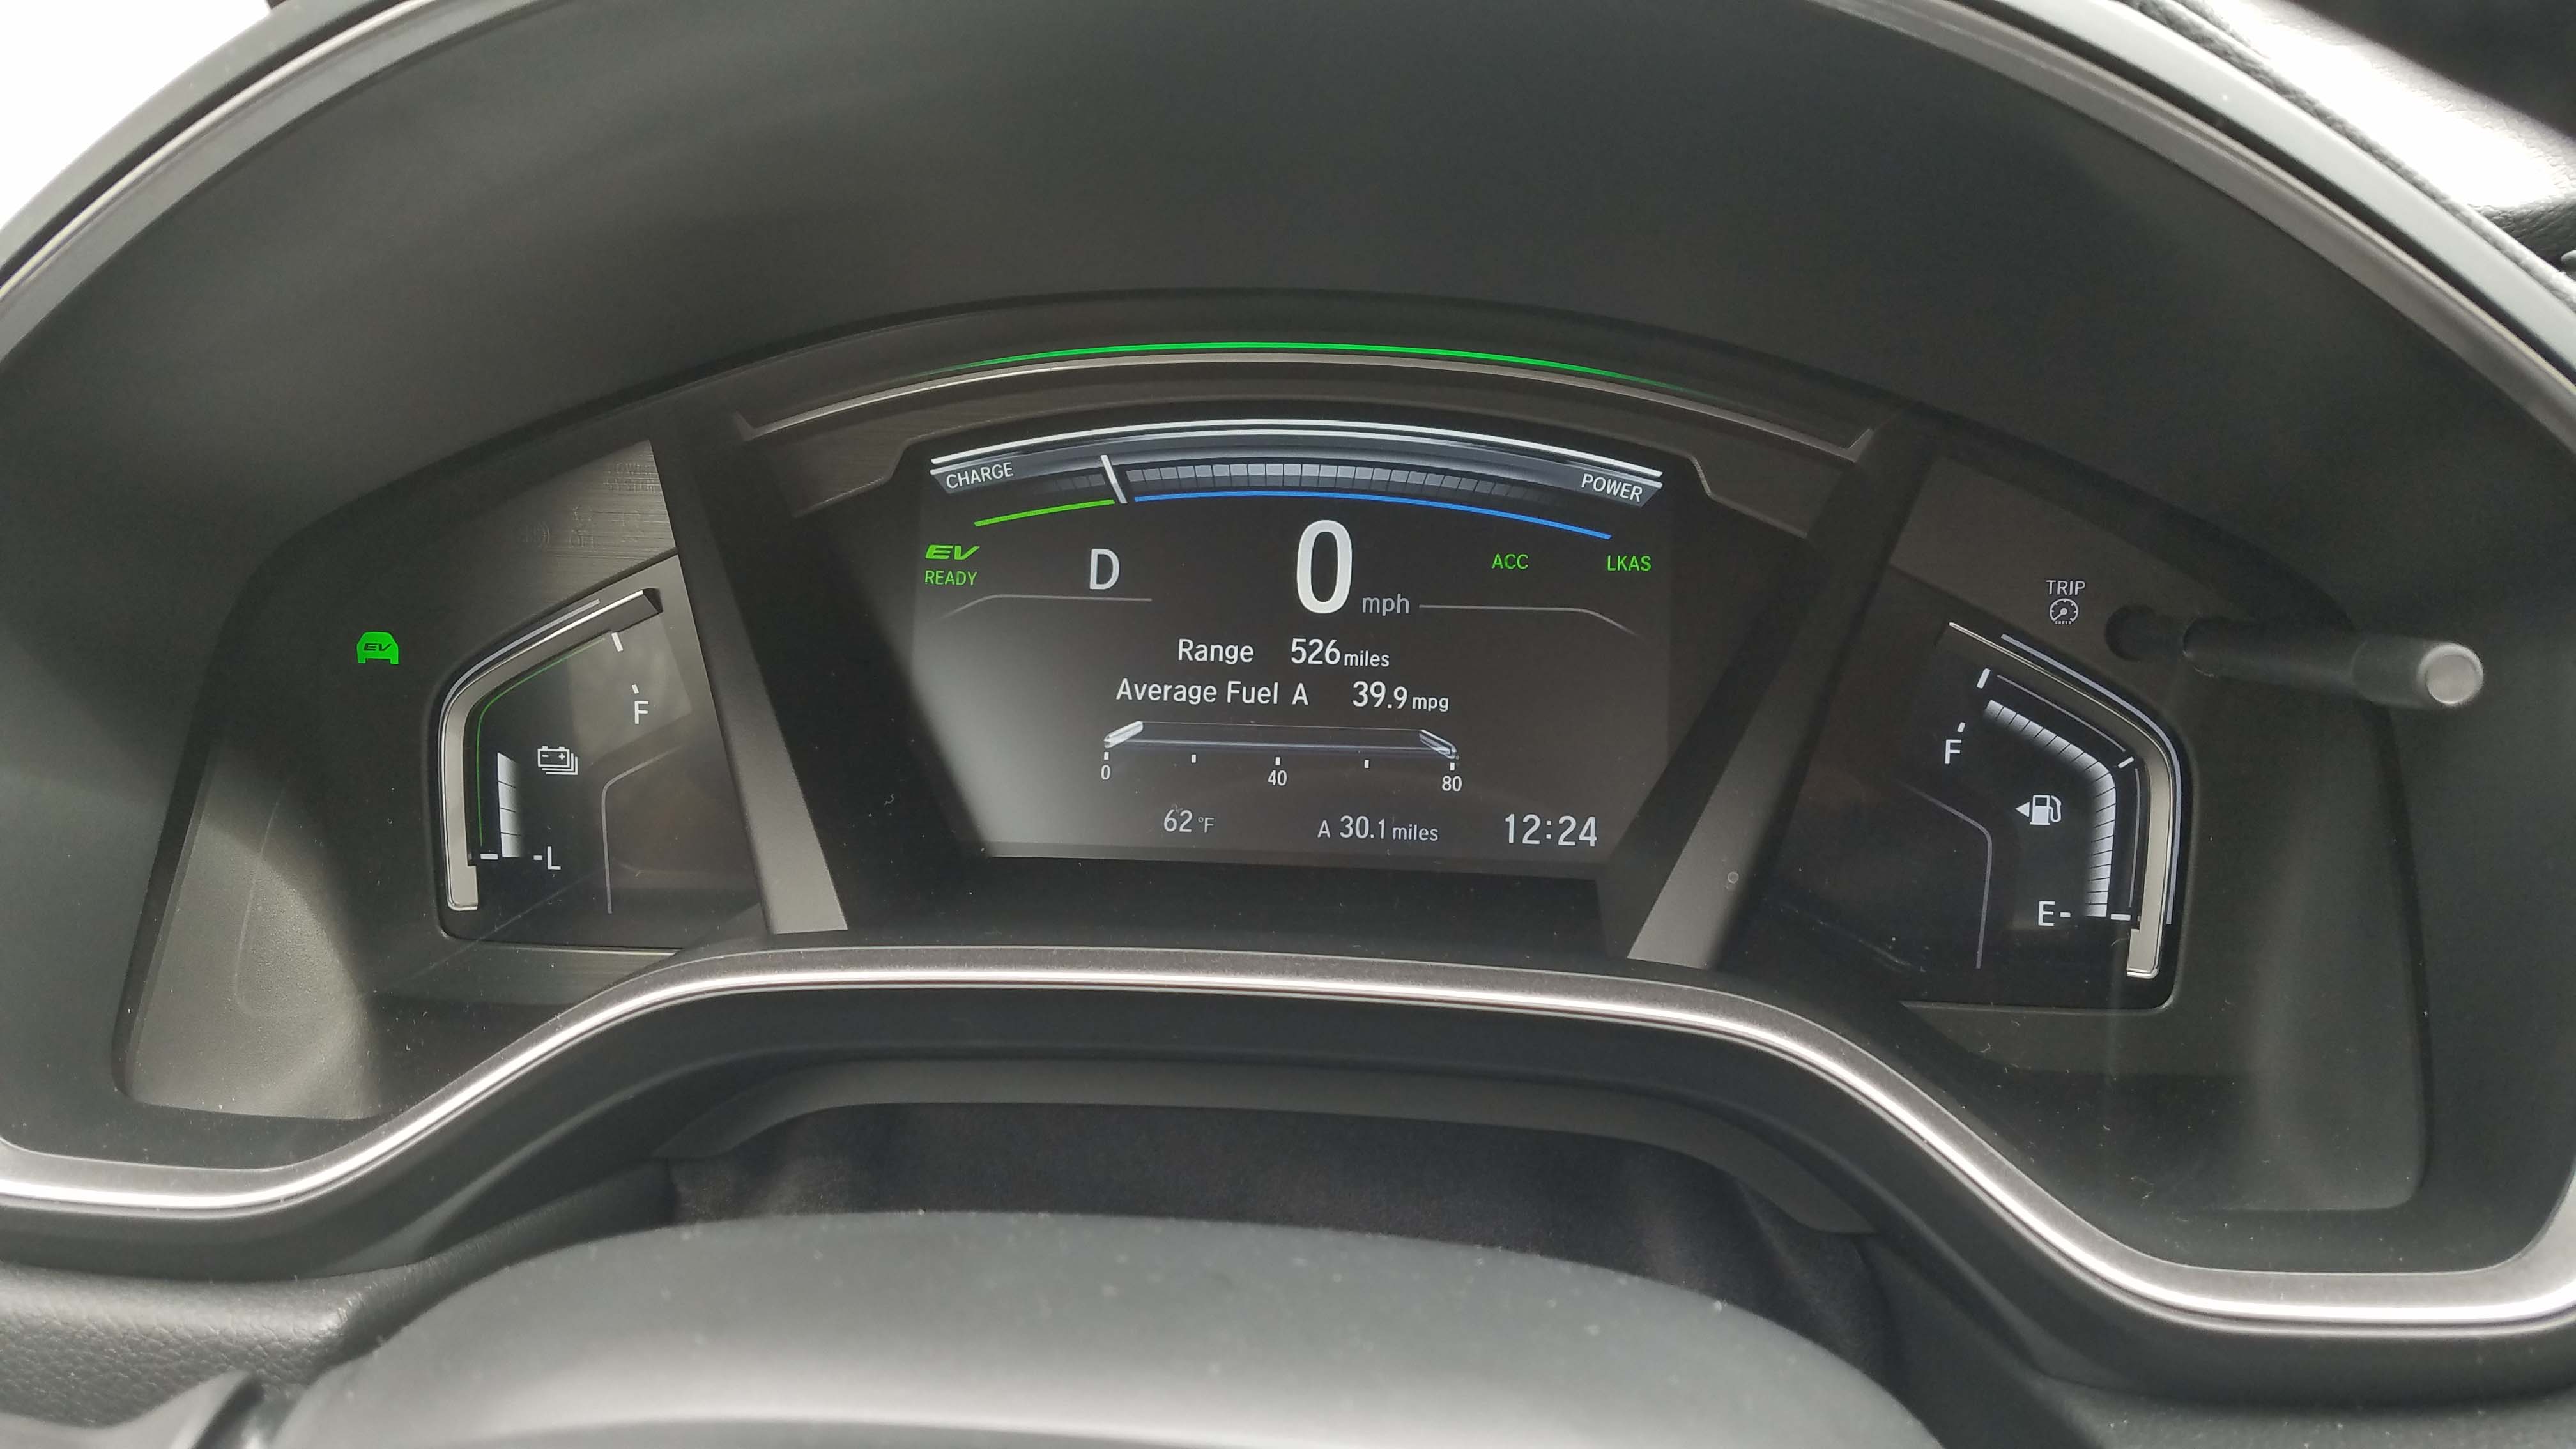 The 2020 Honda CR-V Hybrid gets 40 mpg in city driving.